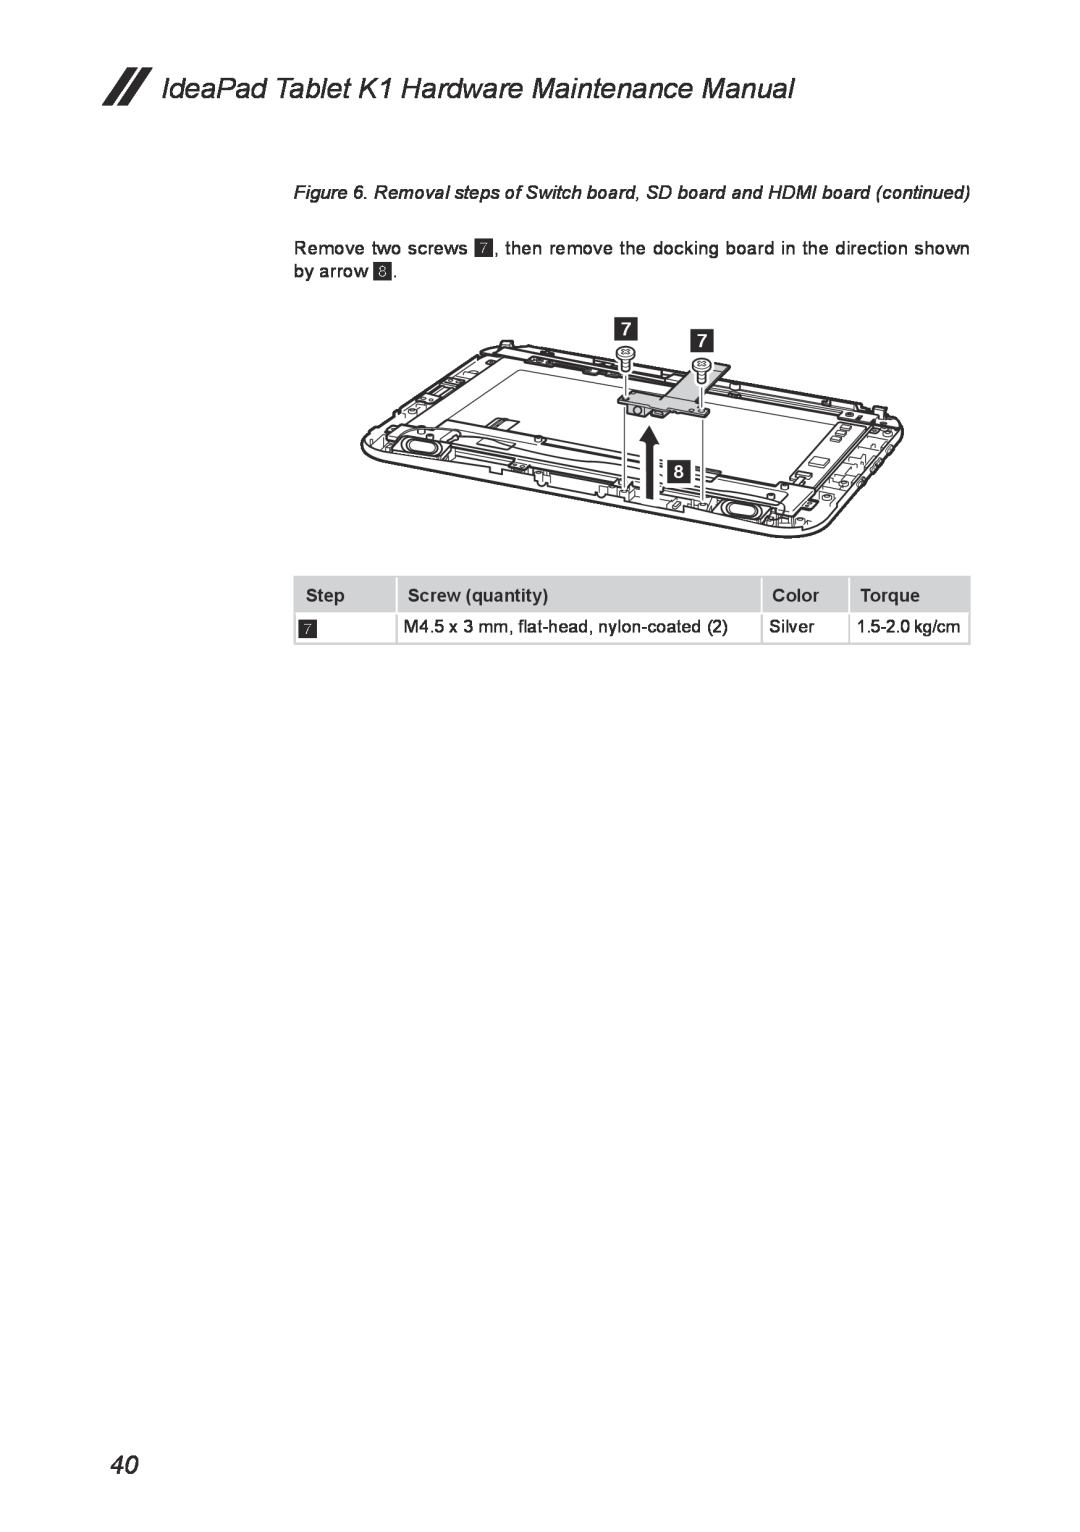 Lenovo T20x2-1, 1304XF8 manual IdeaPad Tablet K1 Hardware Maintenance Manual, Step, Screw quantity, Color, Torque 